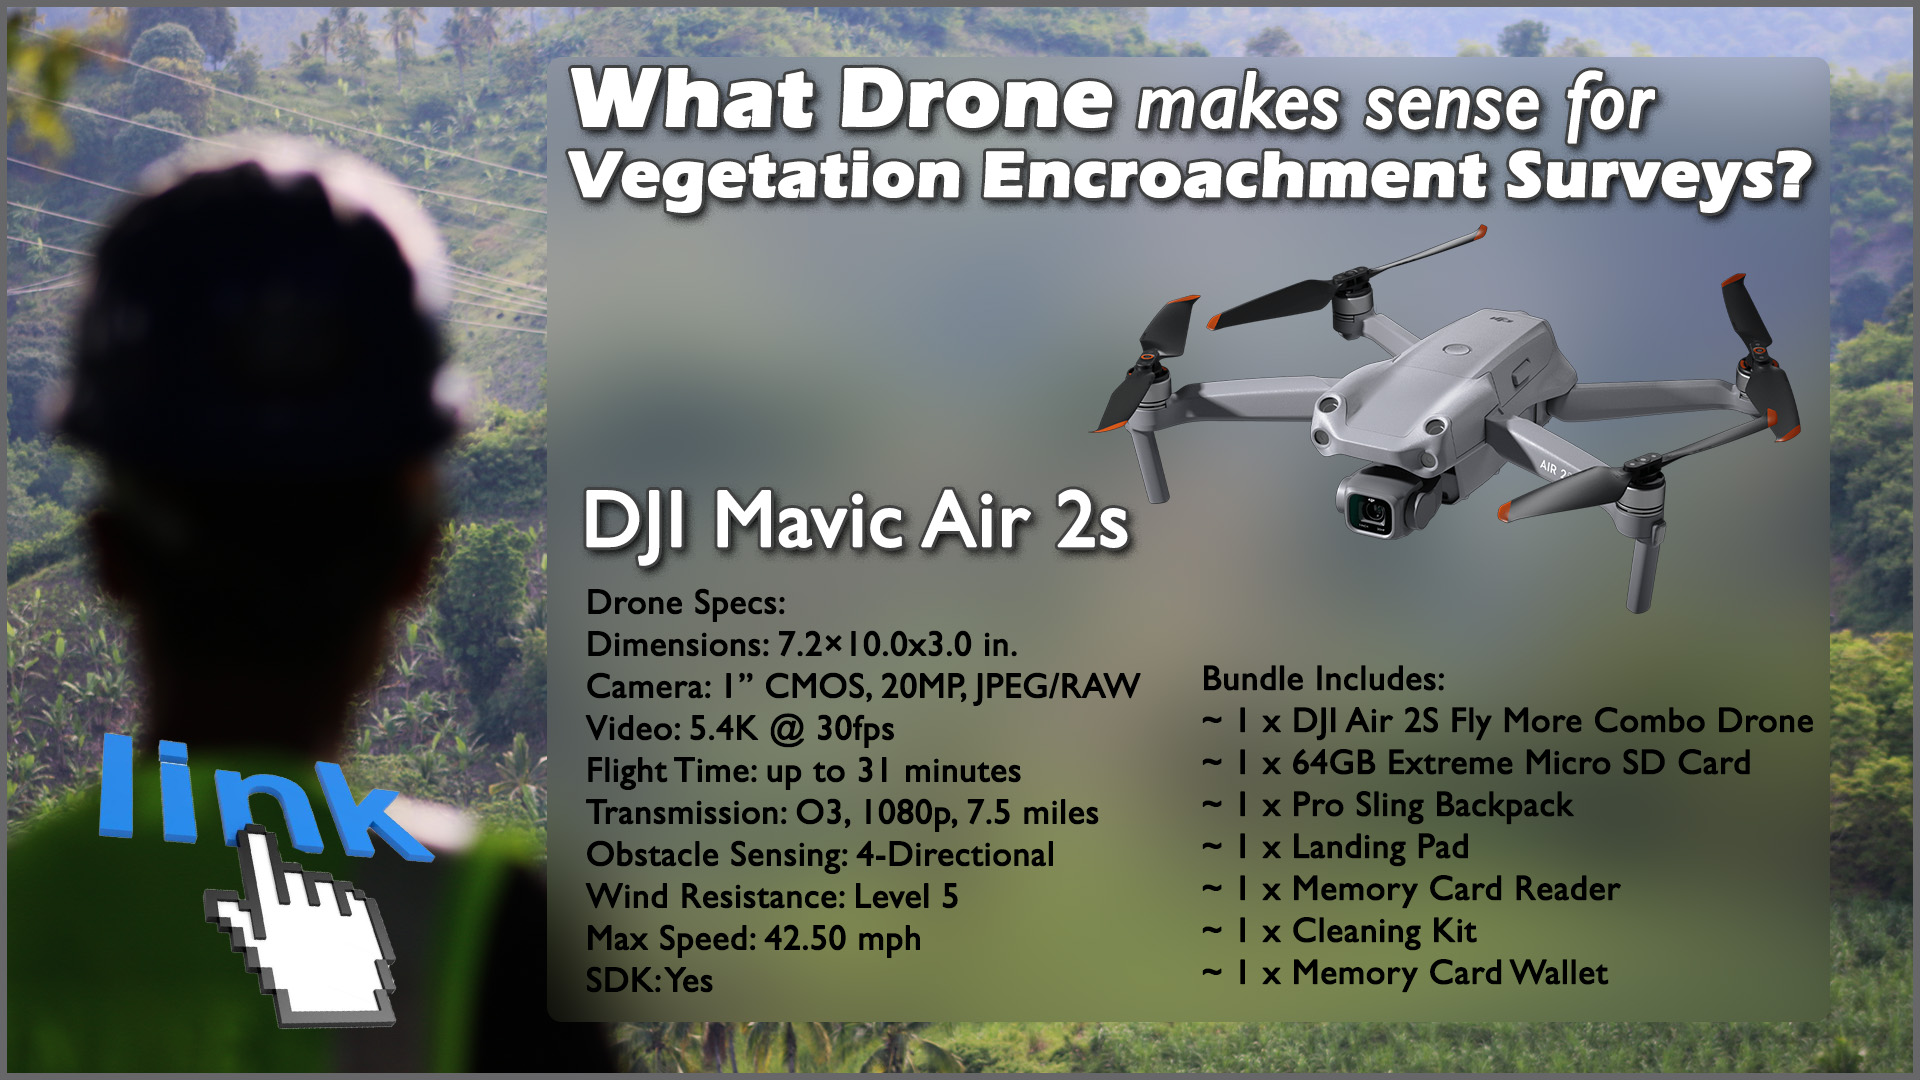 DJI Mavic Air 2S drone for photogrammetry vegetation encroachment survey